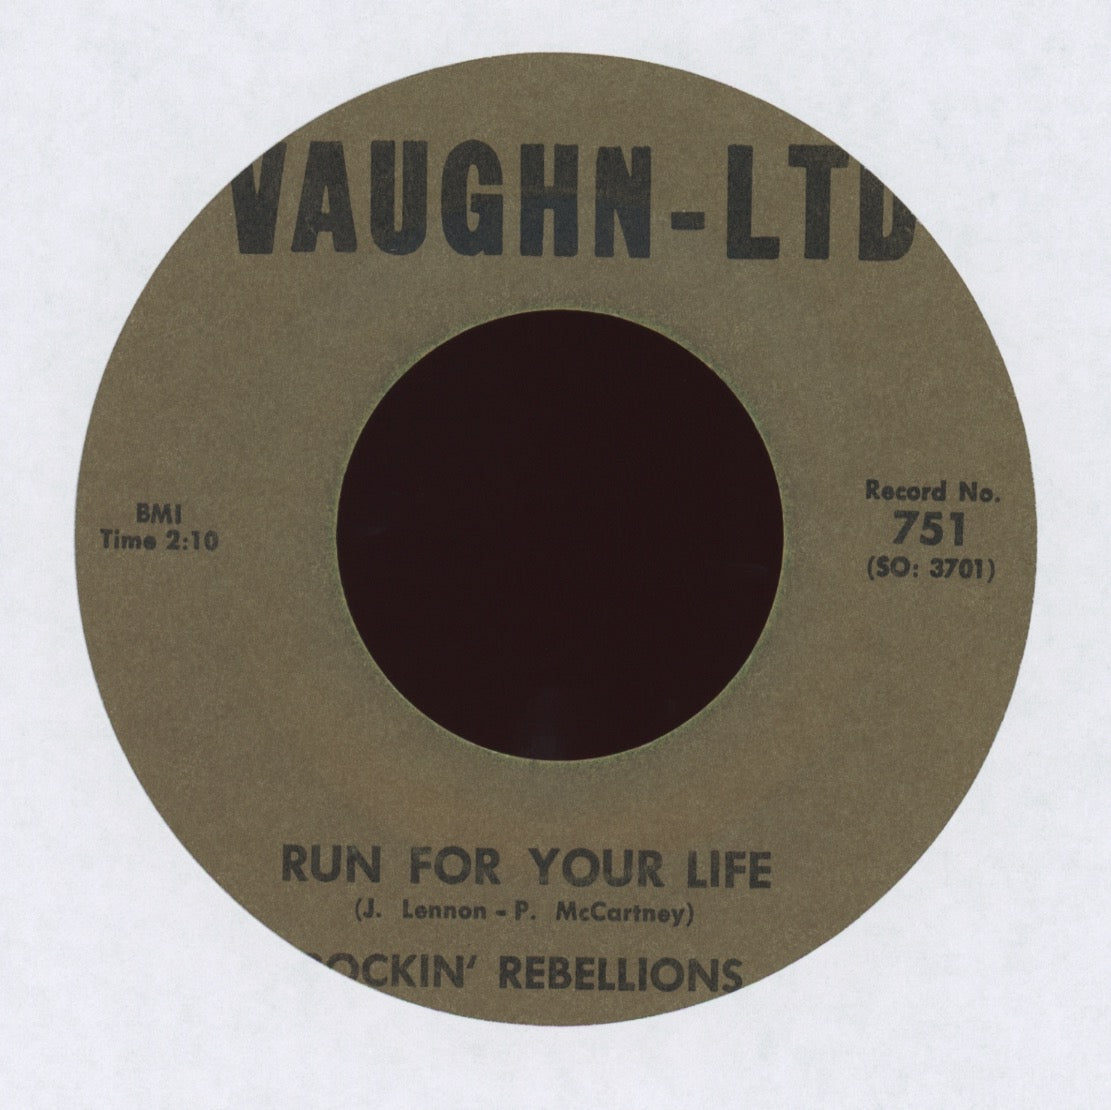 The Rockin' Rebellions - Run For Your Life on Vaughn Ltd